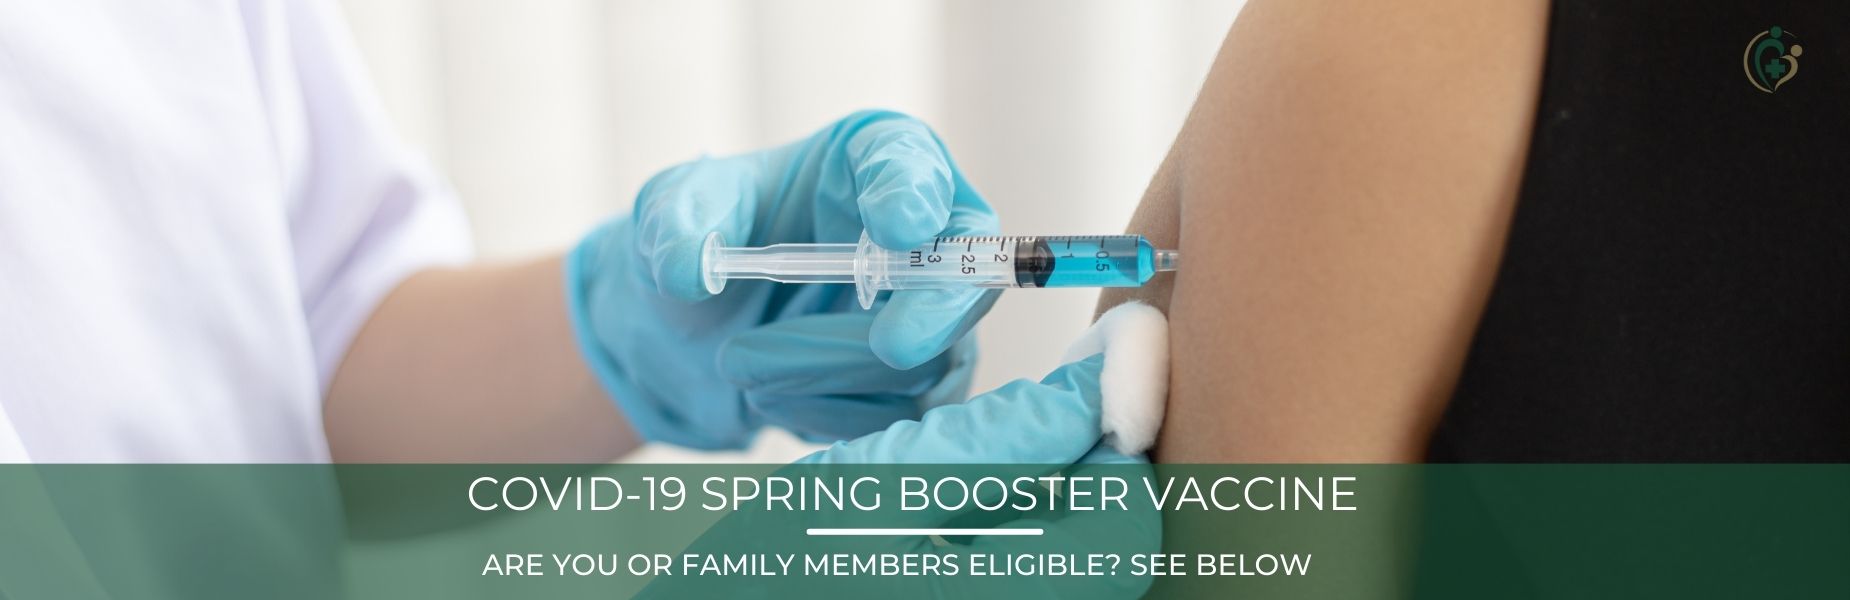 COVID-19 Spring Booster Vaccine